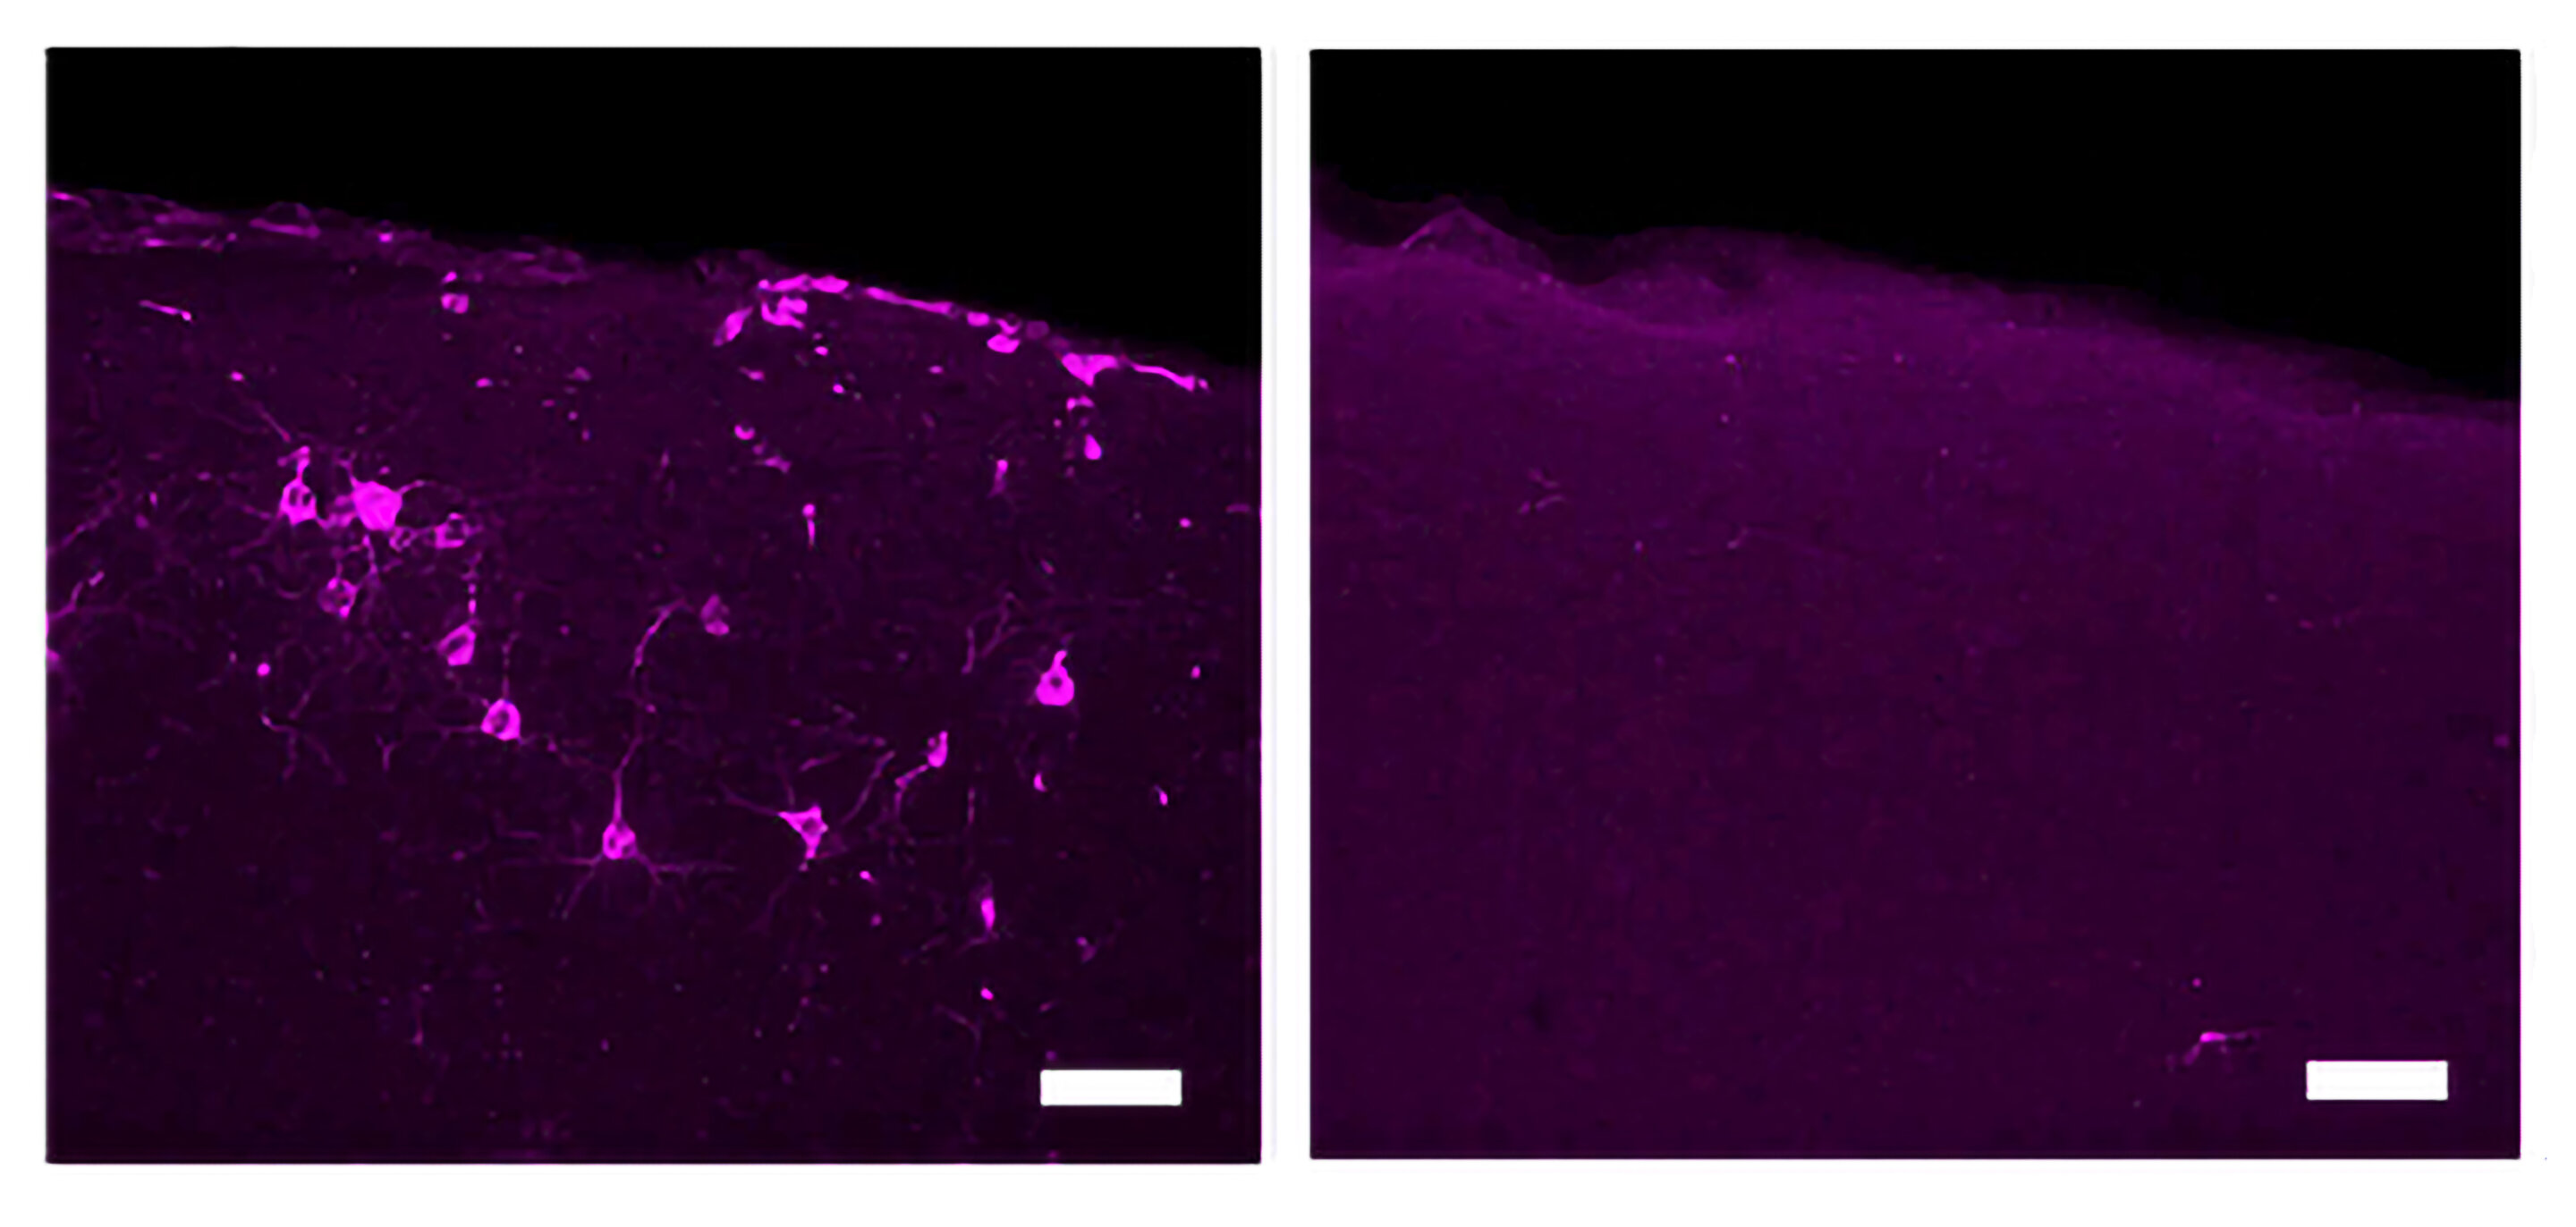 40 Hz vibrations reduce Alzheimer’s pathology, symptoms in mouse models